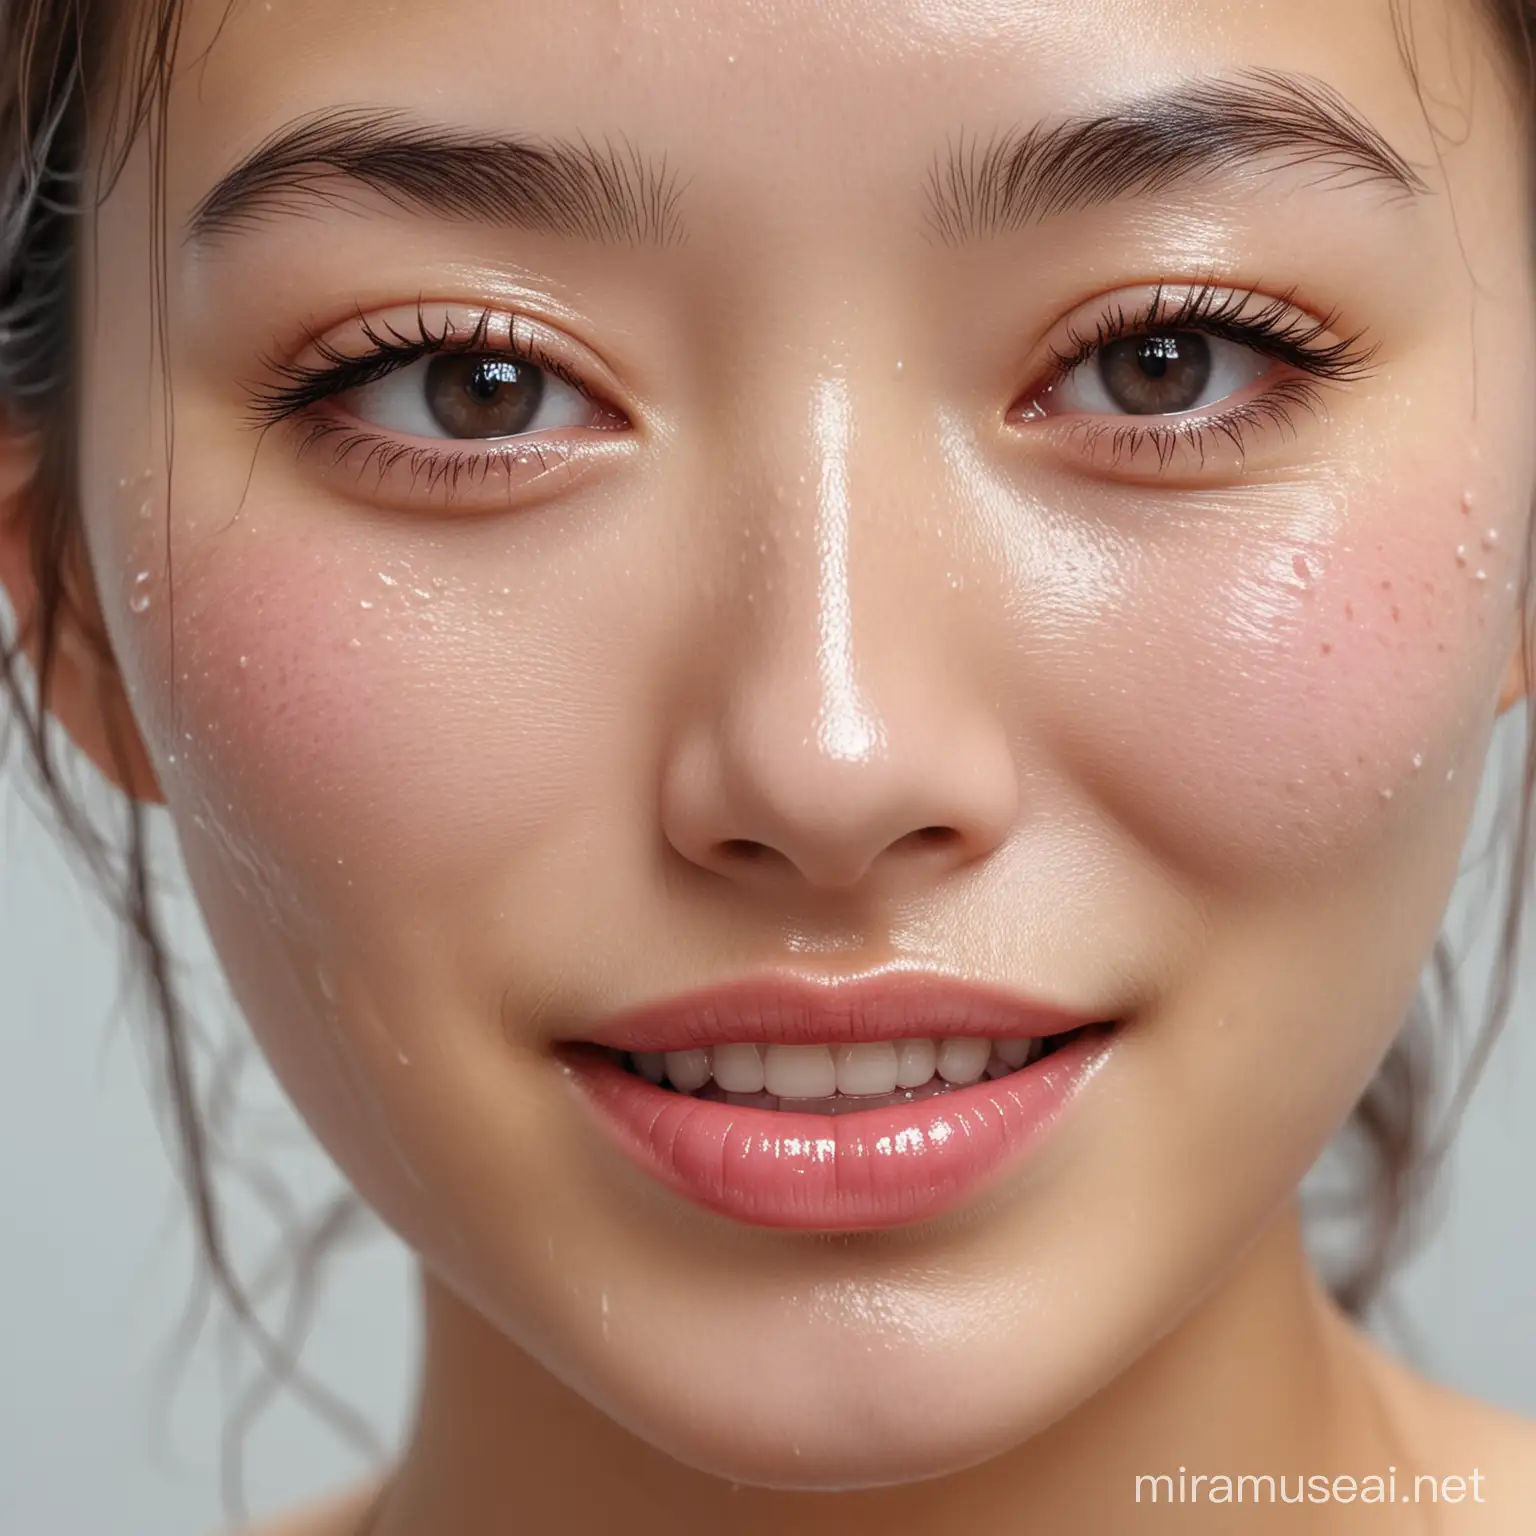 Smiling Korean Woman with Natural Full Lips CloseUp